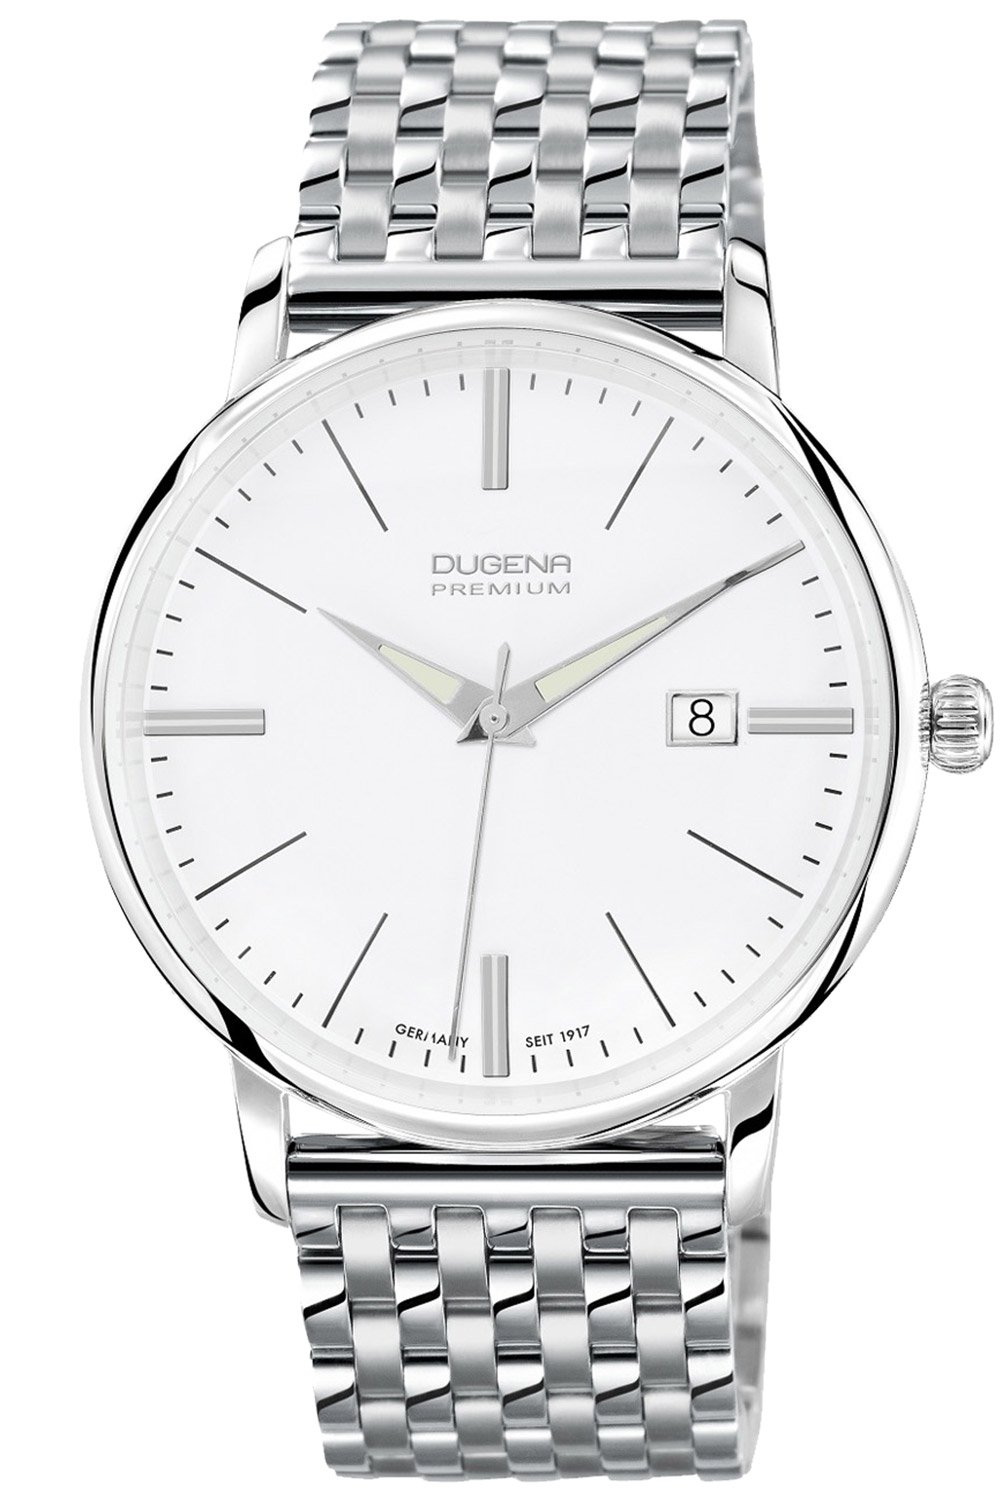 Dugena Festa Herren-Armbanduhr • uhrcenter 7090166 kaufen